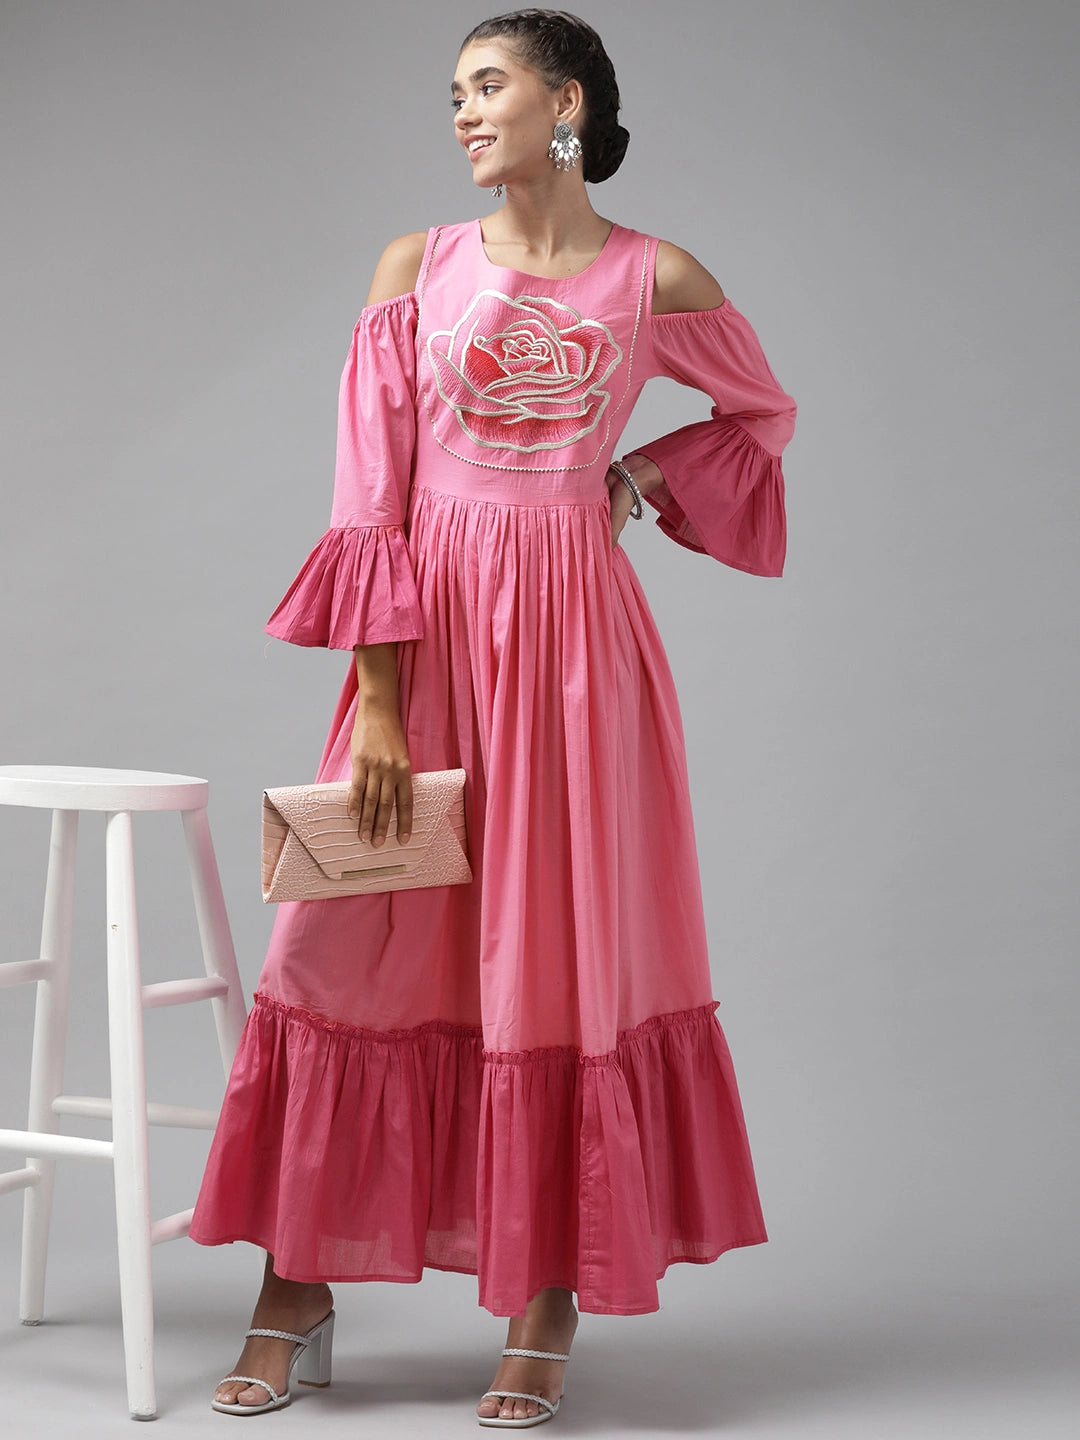 Yufta Pink Ethnic Maxi Dress-Yufta Store-9658DRSPKS